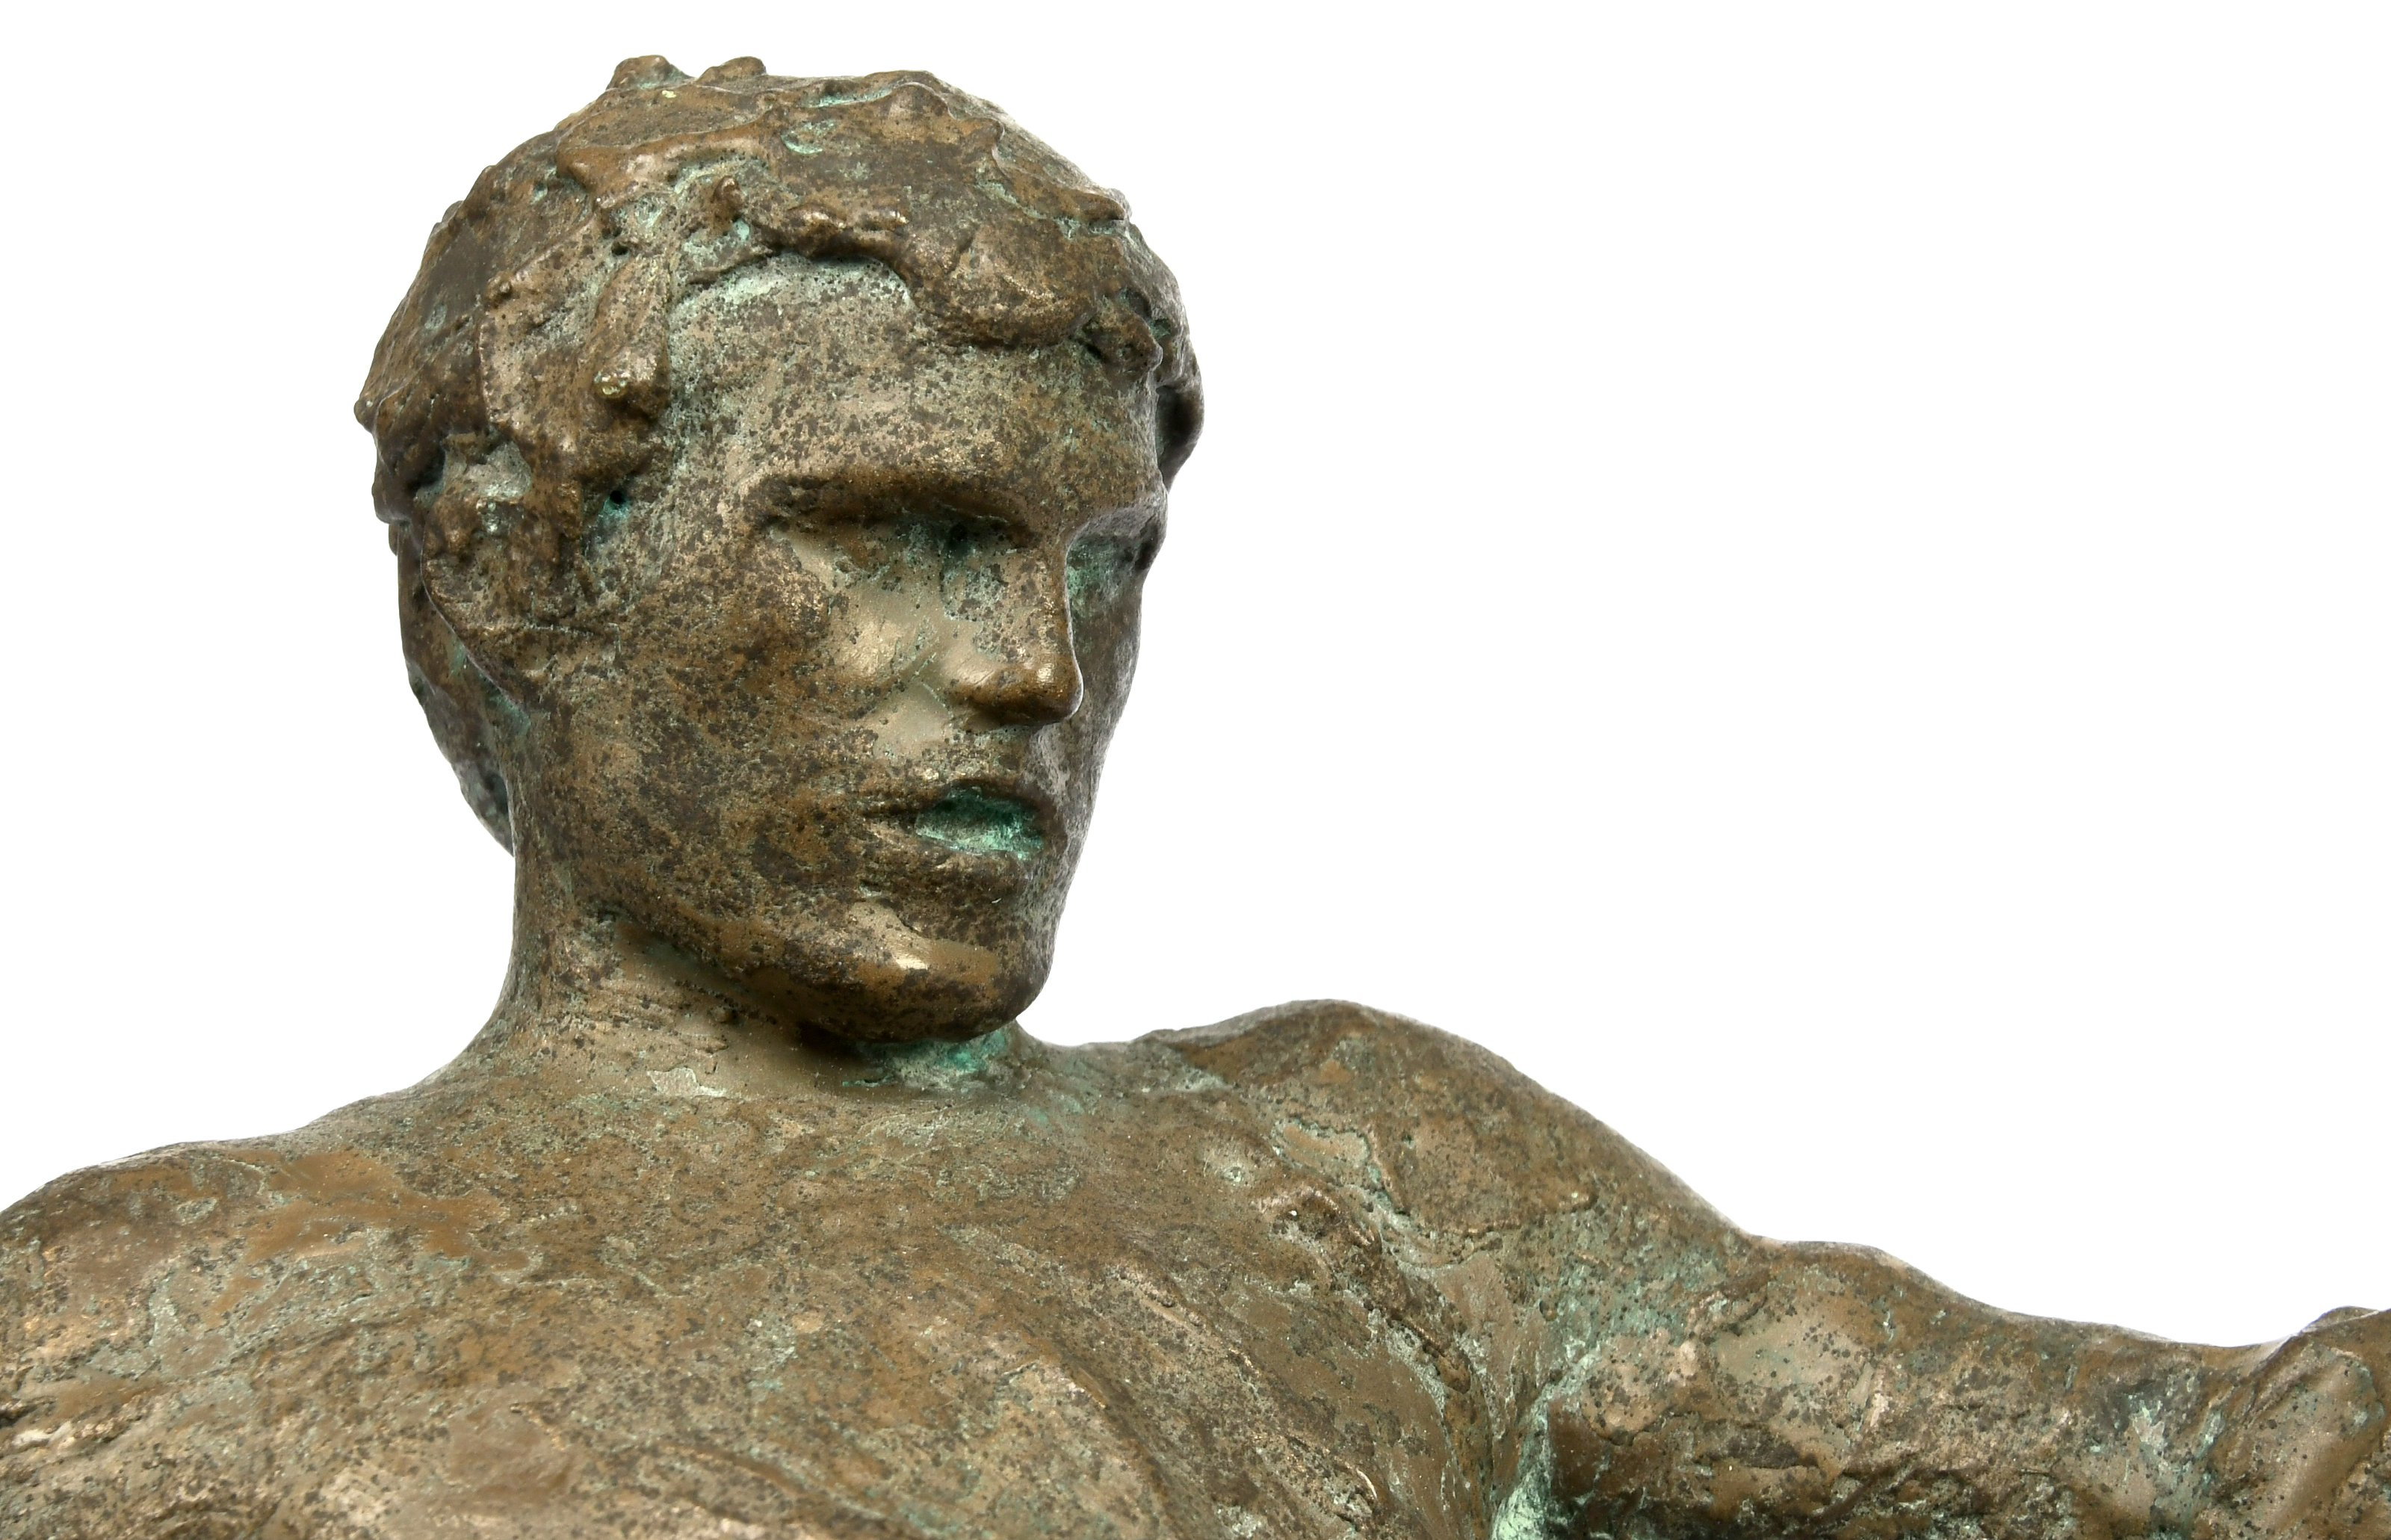 Football Memorabilia, a Bronze Footballer Statue made by Renowned Artist "John Bonar Dunlop" - Image 3 of 4